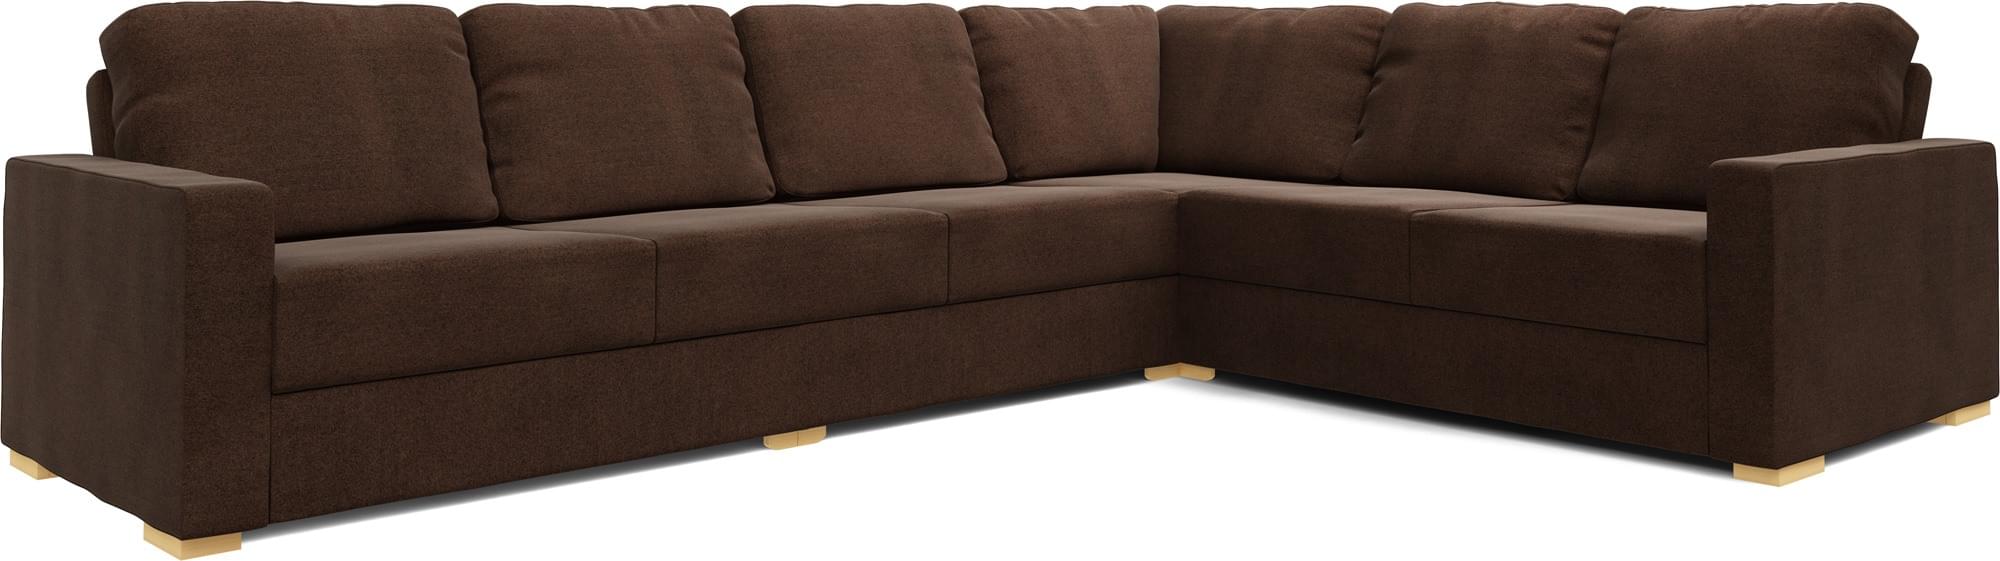 Alda 4X3 Corner Double Sofa Bed